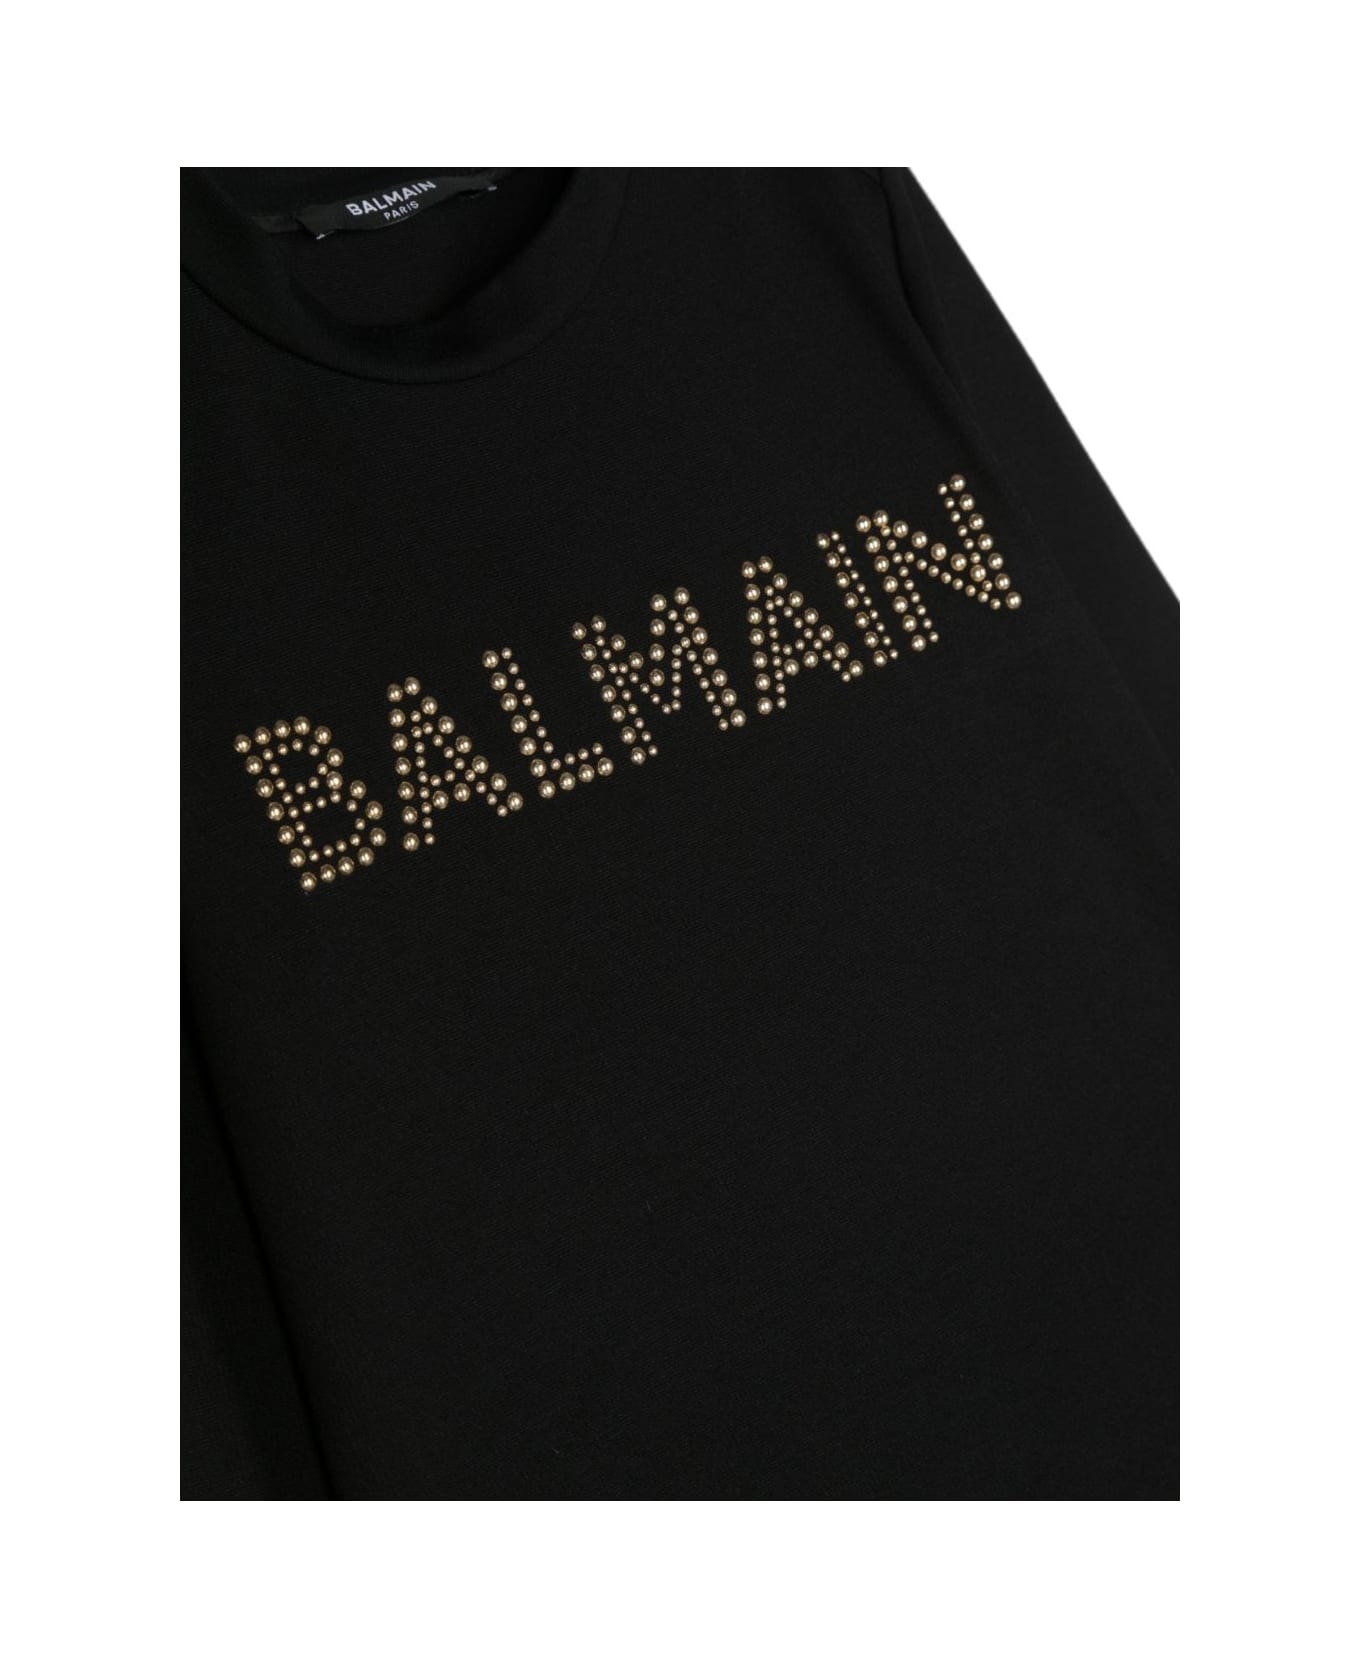 Balmain Sweatshirt Model Dress With Decoration - Black/white ワンピース＆ドレス